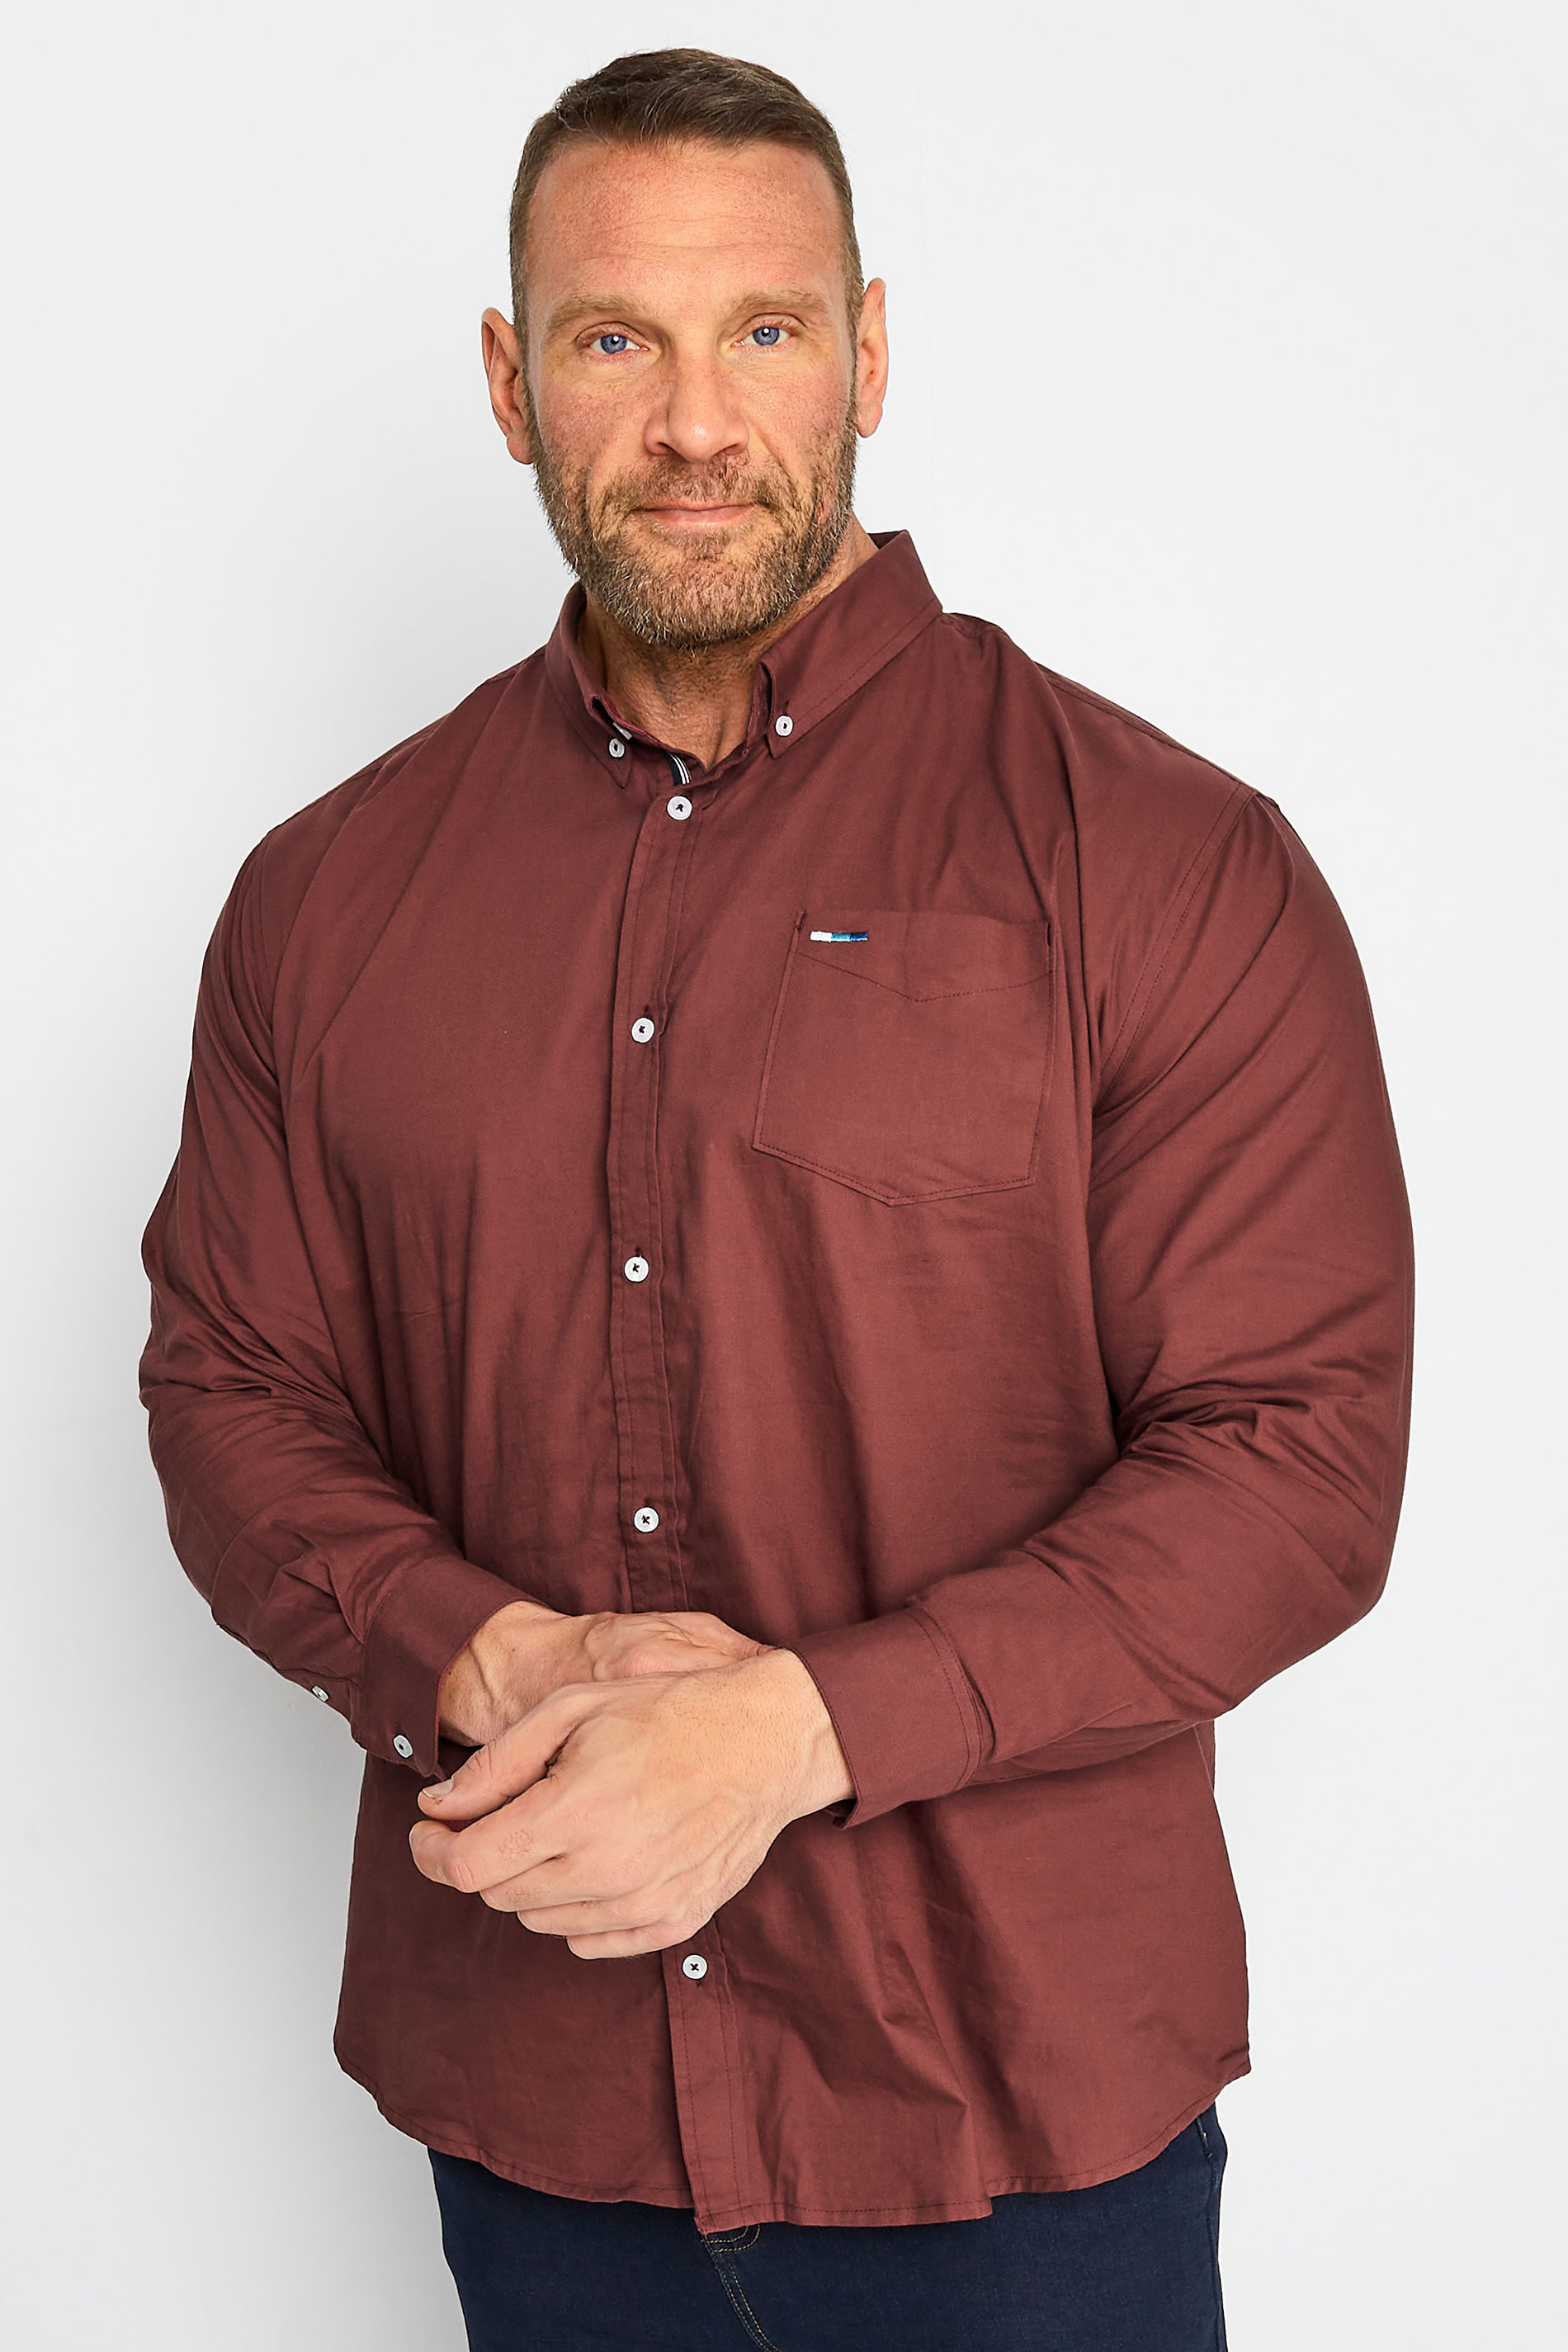 BadRhino Big & Tall Burgundy Red Long Sleeve Oxford Shirt | BadRhino 1